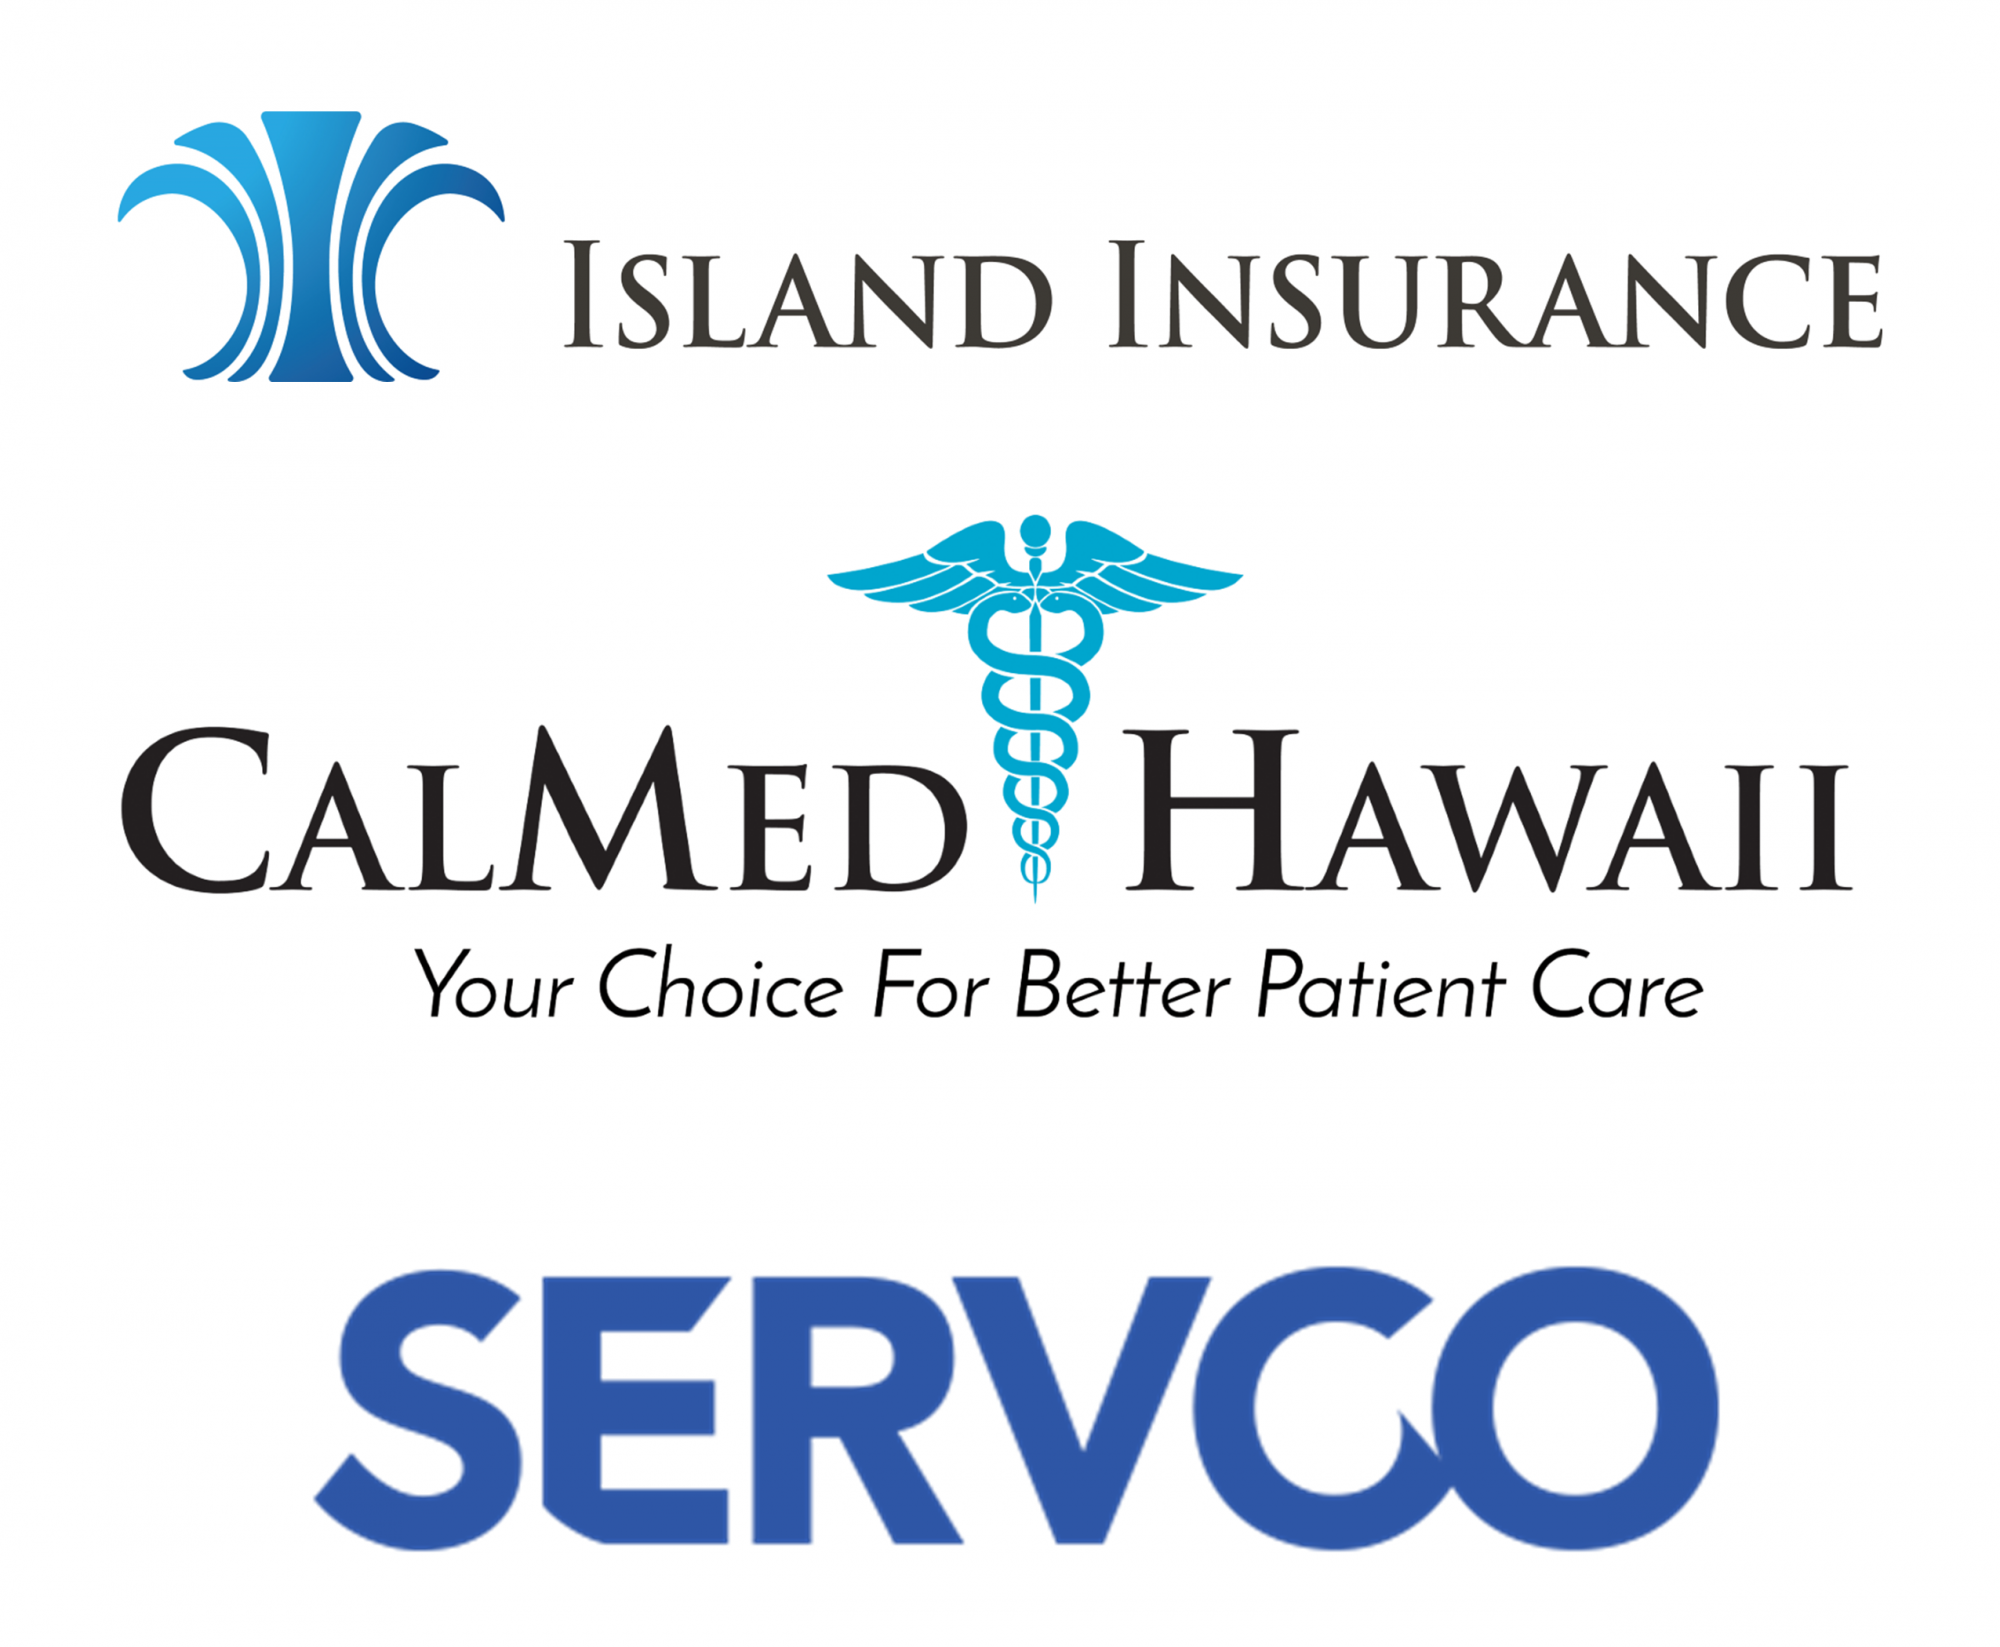 Pacific Sponsors Island Insurance, CalMed Hawaii and Servco